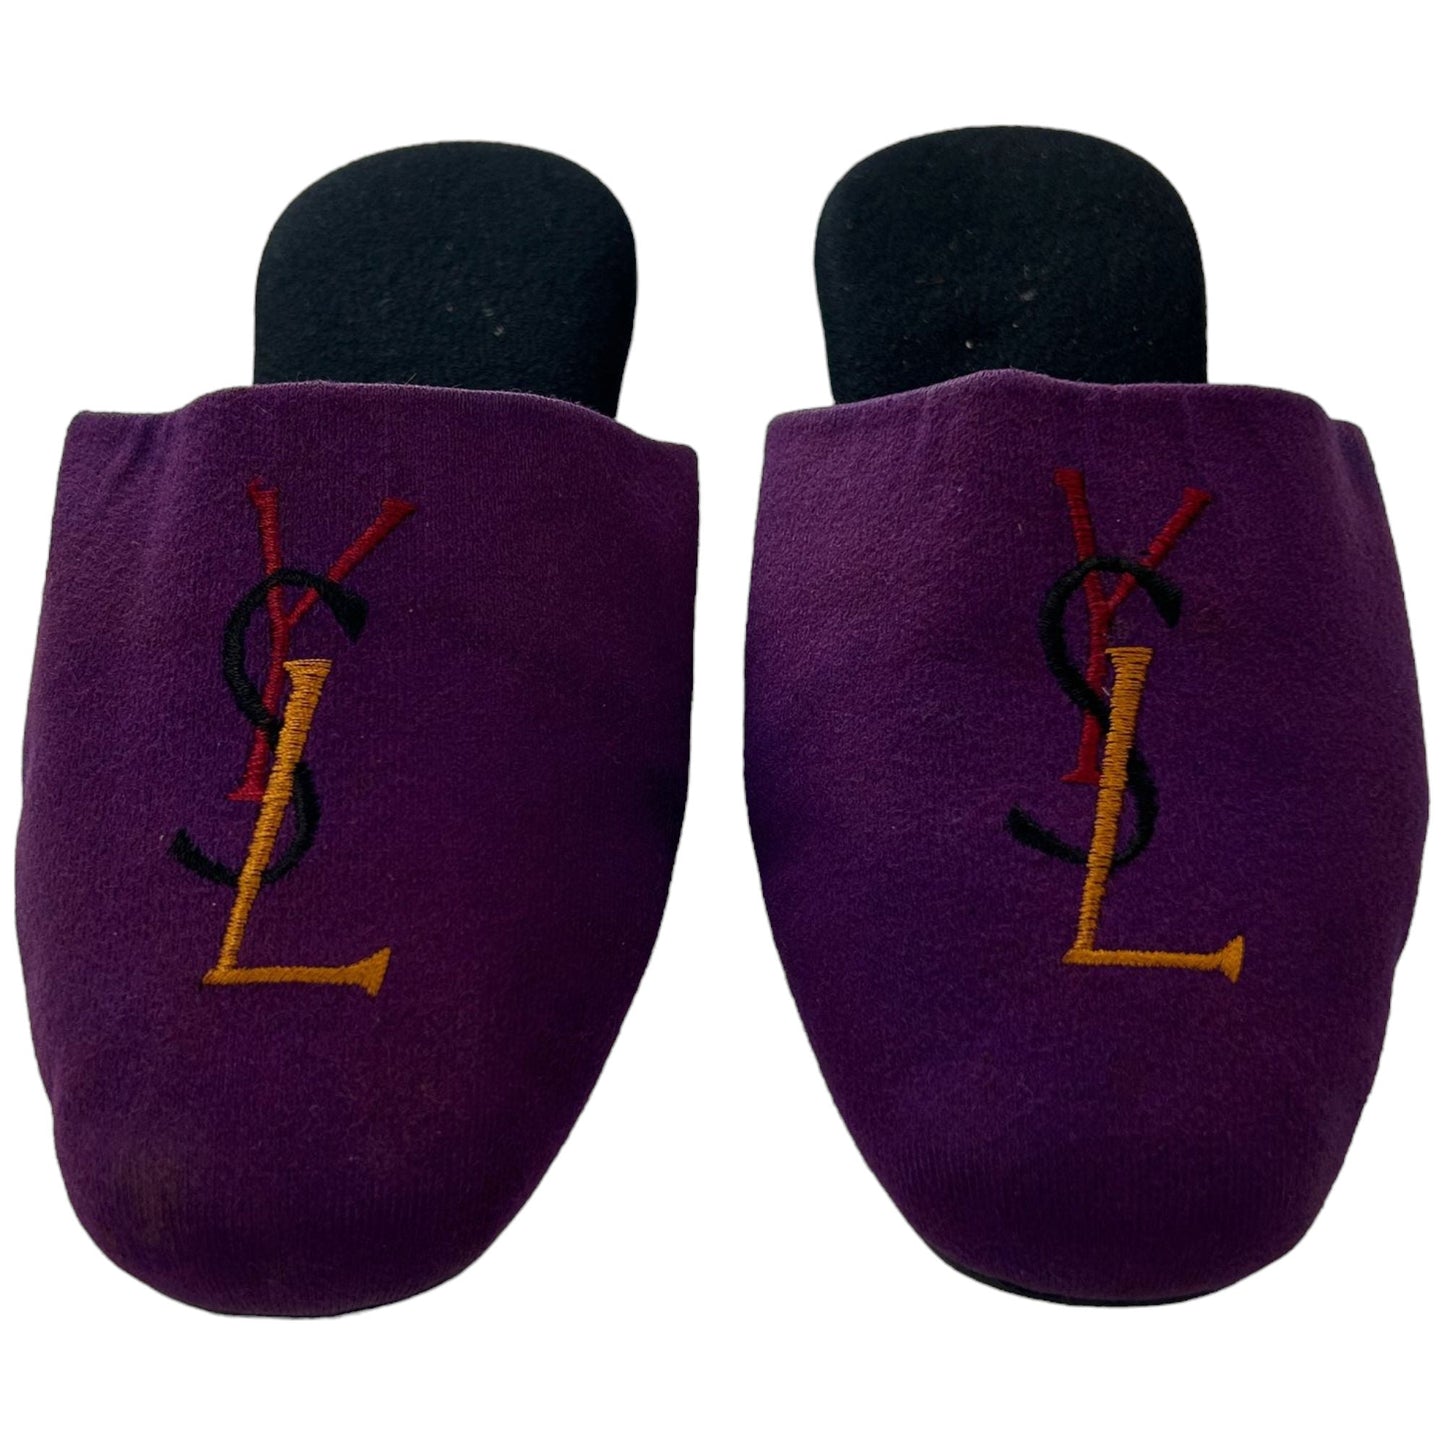 Vintage YSL Yves Saint Laurent Slippers Size UK 5